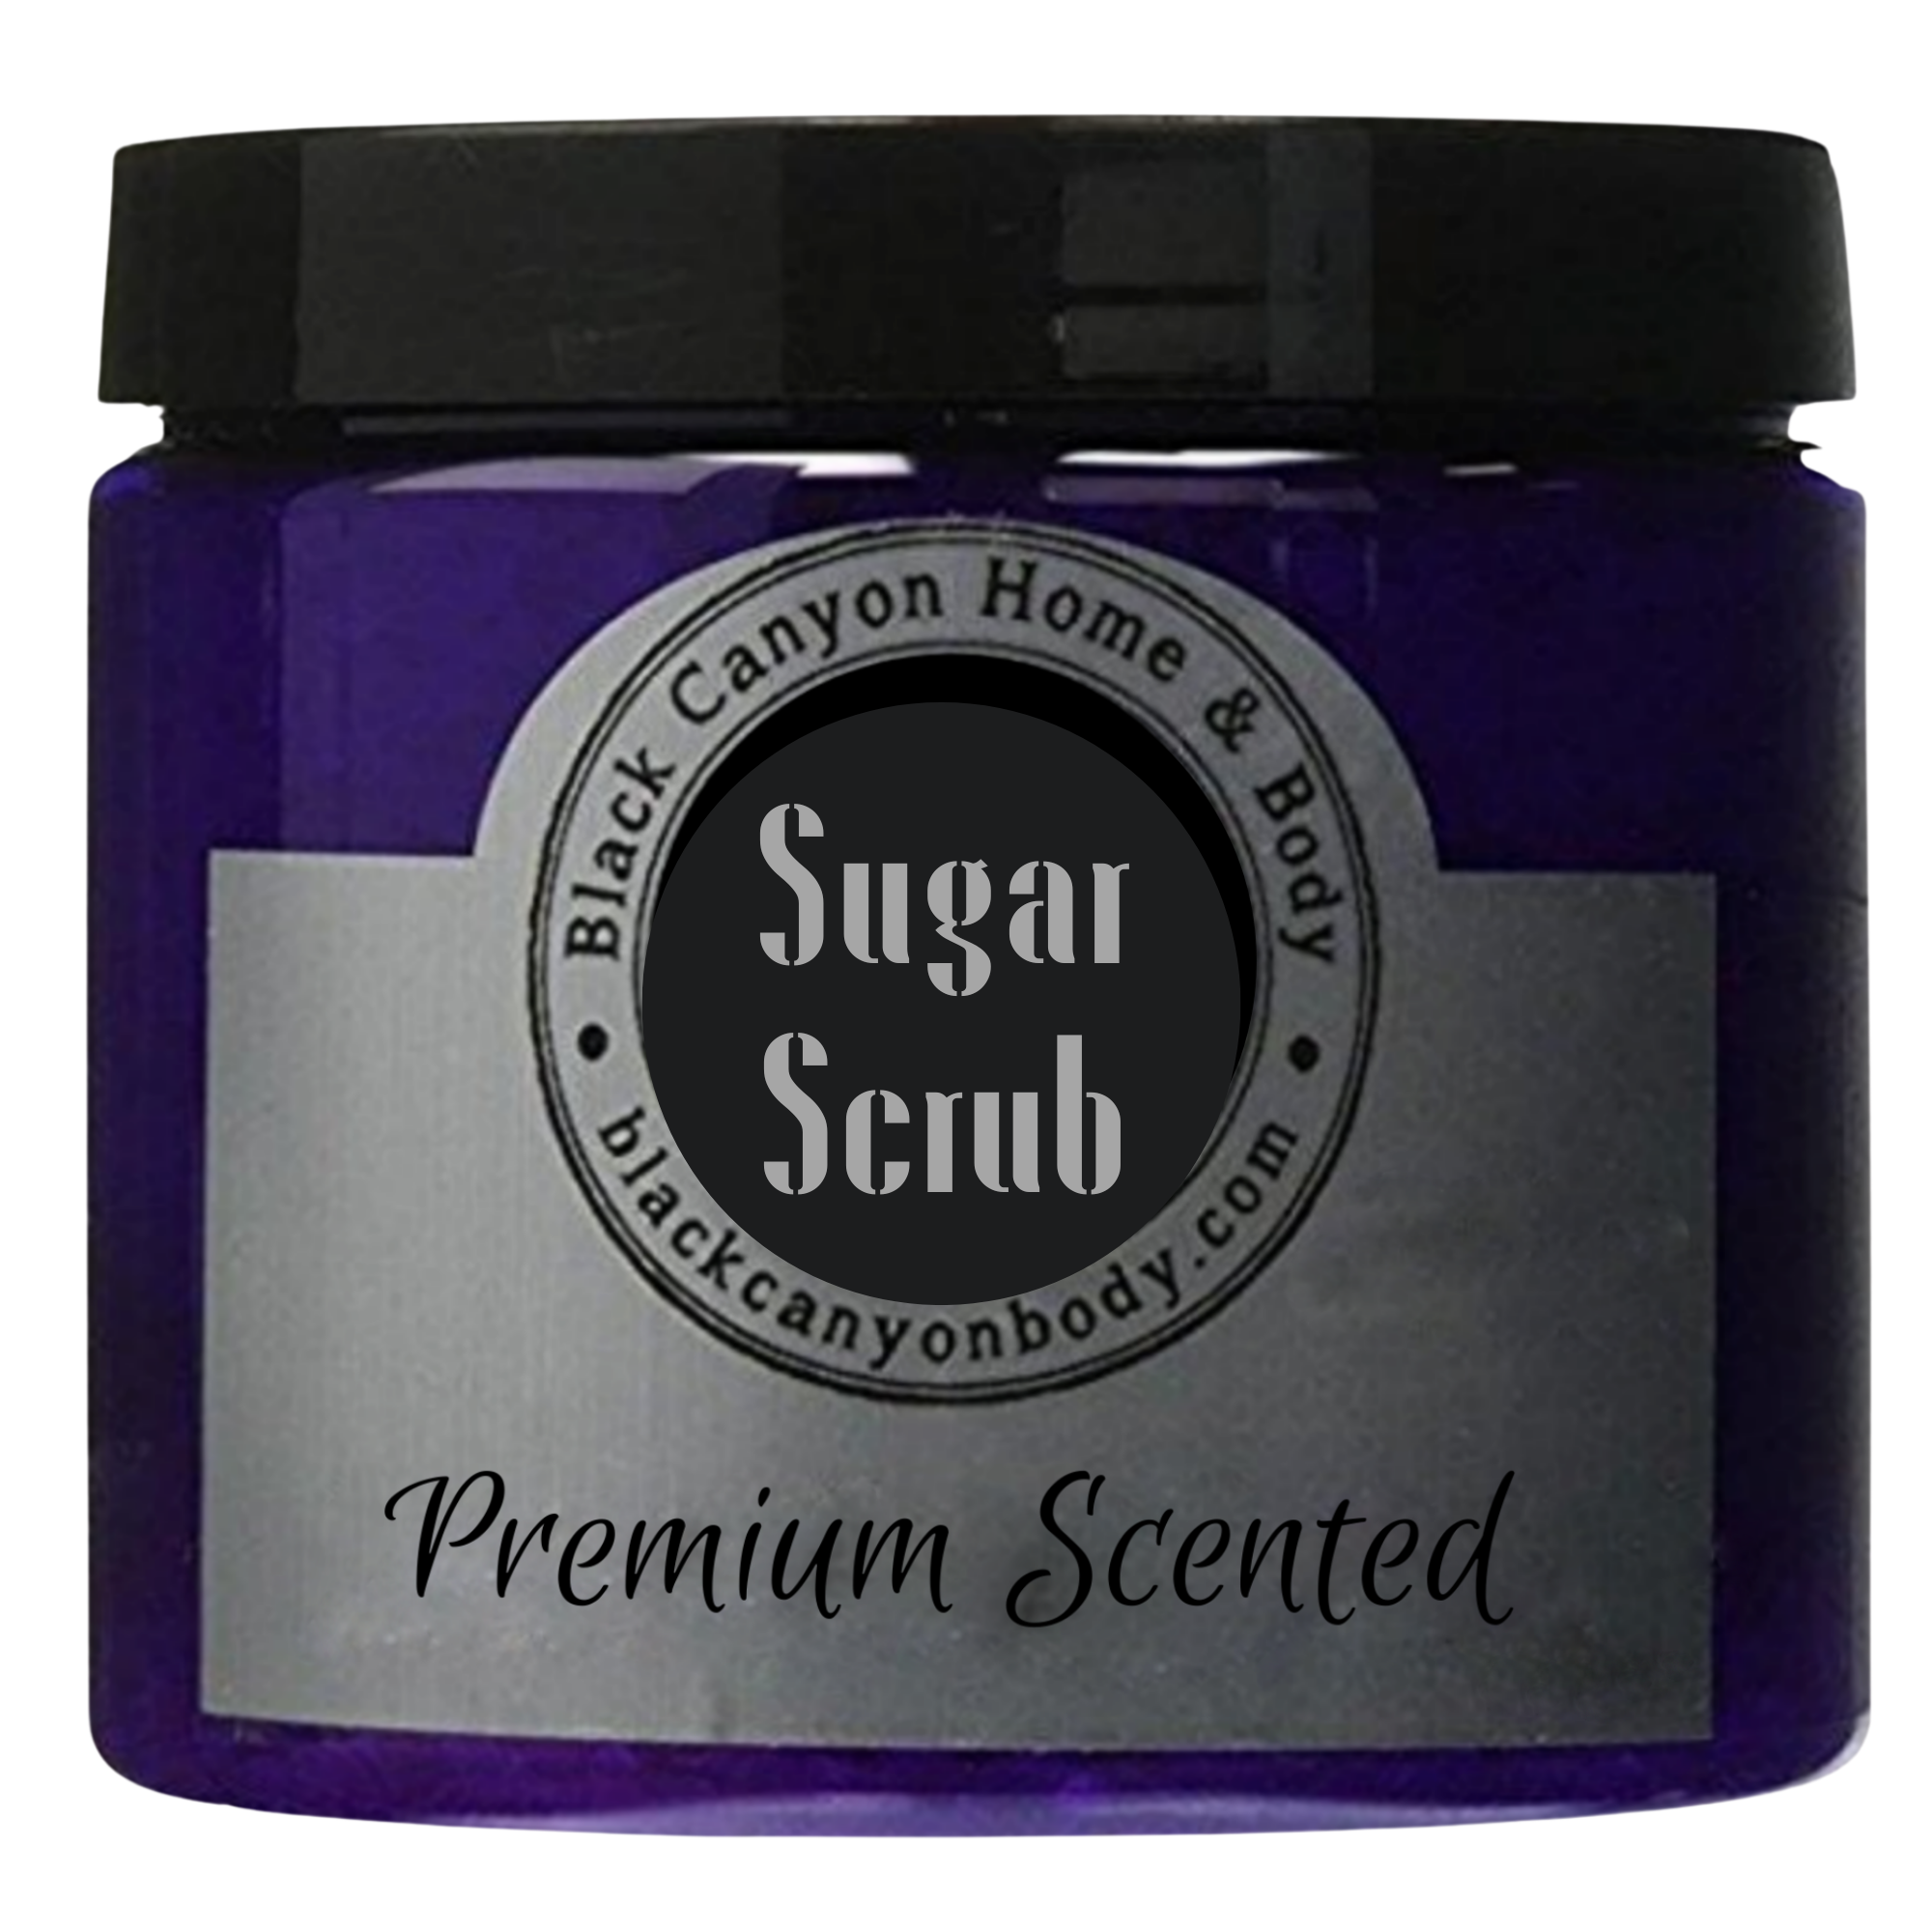 Black Canyon Cashmere Sandalwood & Vanilla Scented Sugar Scrub